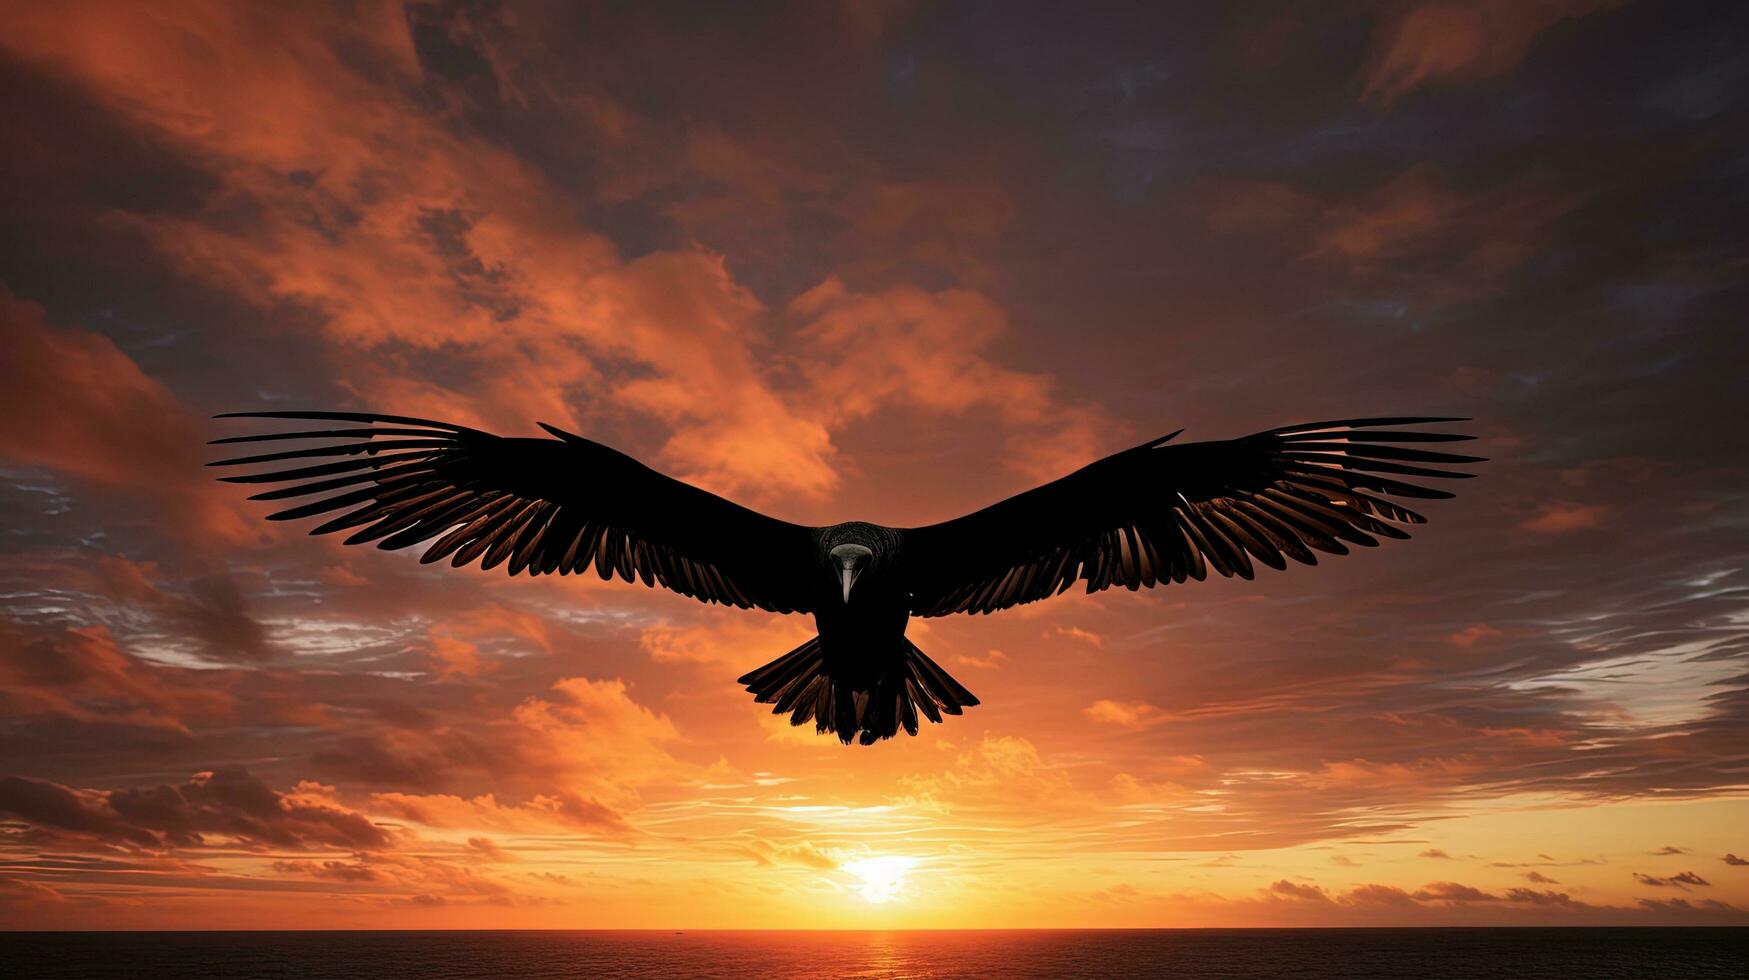 Galapagos Himmel hält ein Fregatte Vogel im Flug. Silhouette Konzept foto